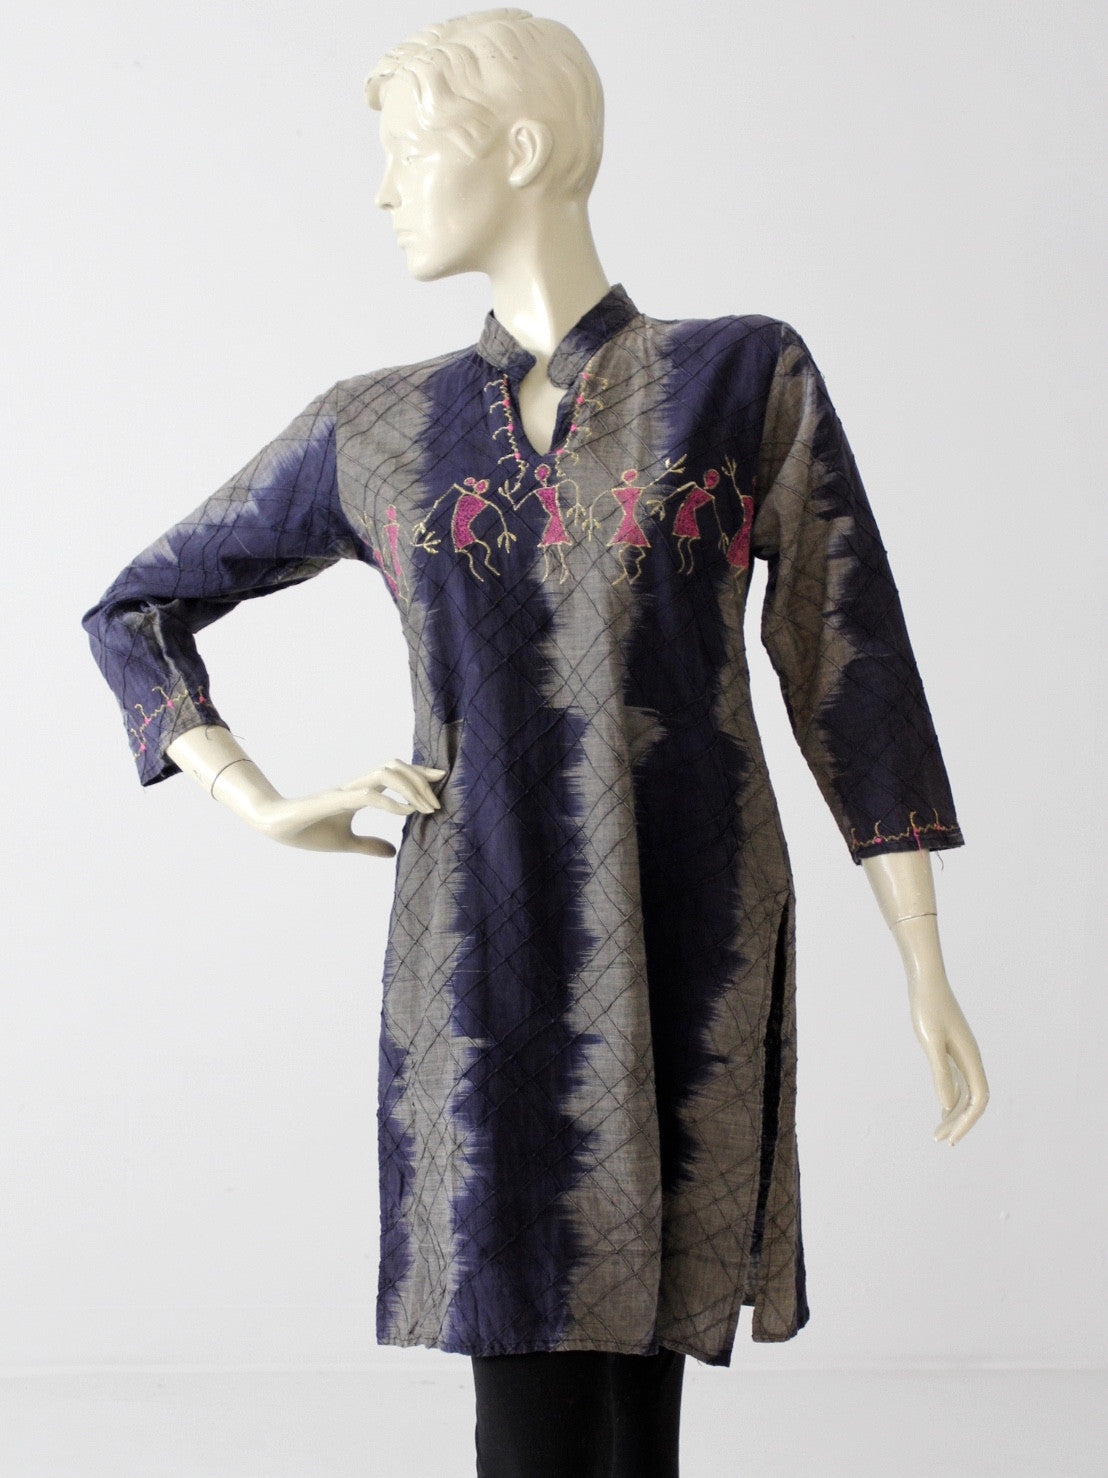 vintage tie-dye hippie kurta top tunic dress